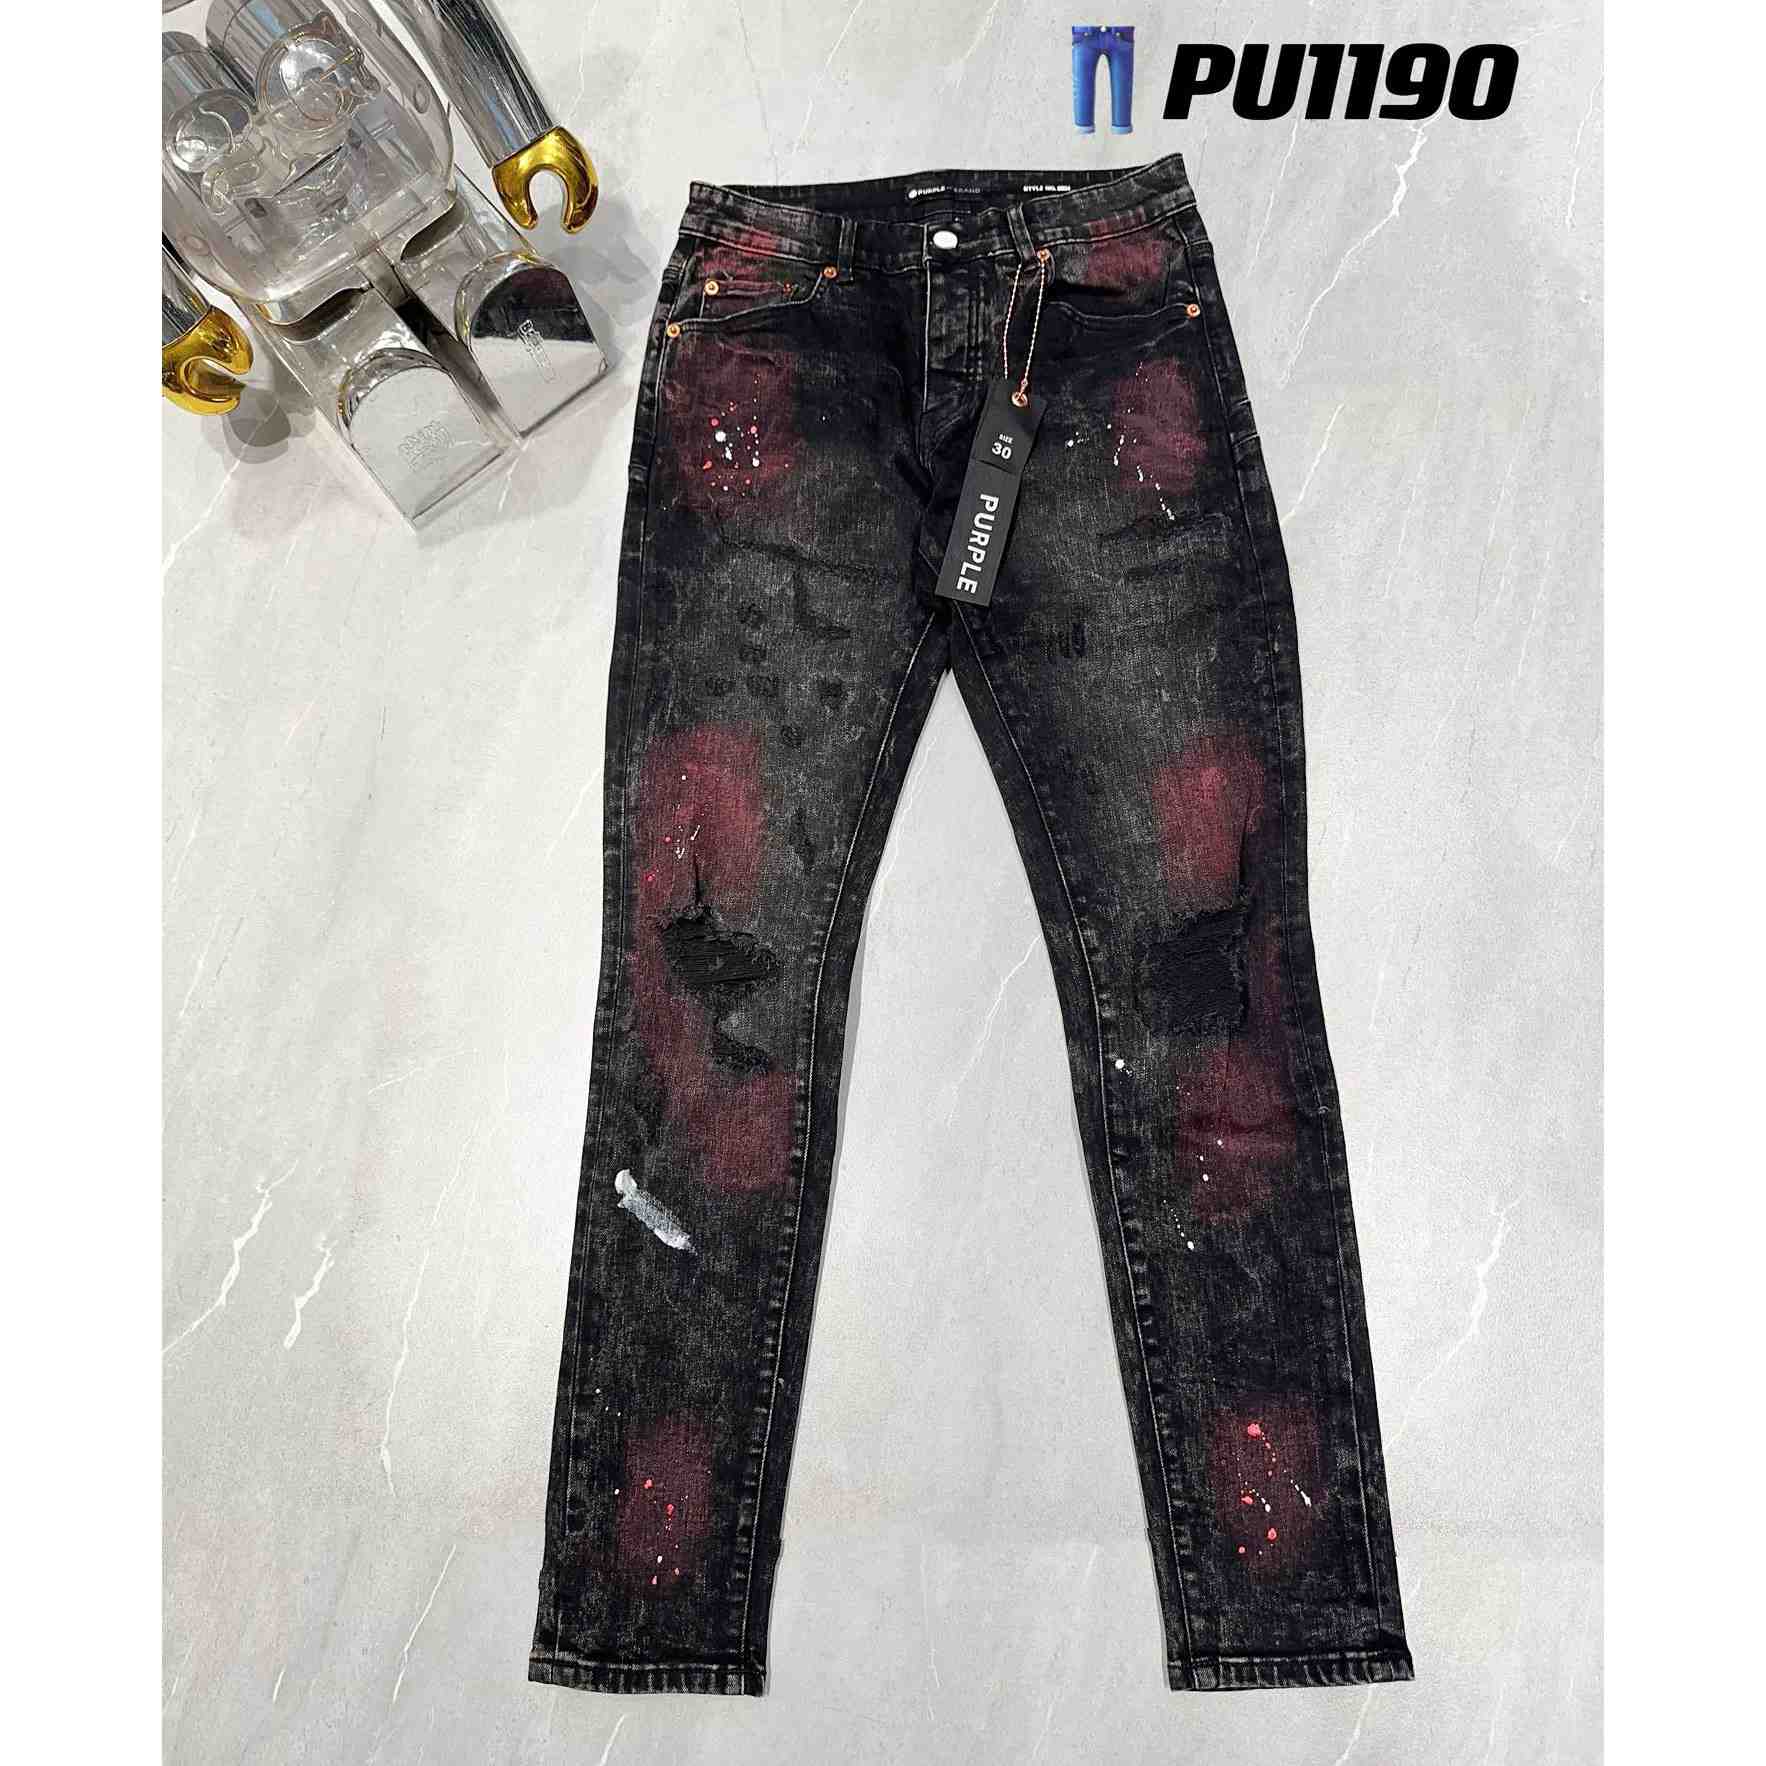 Purple-Brand Jeans   PU1190 - everydesigner